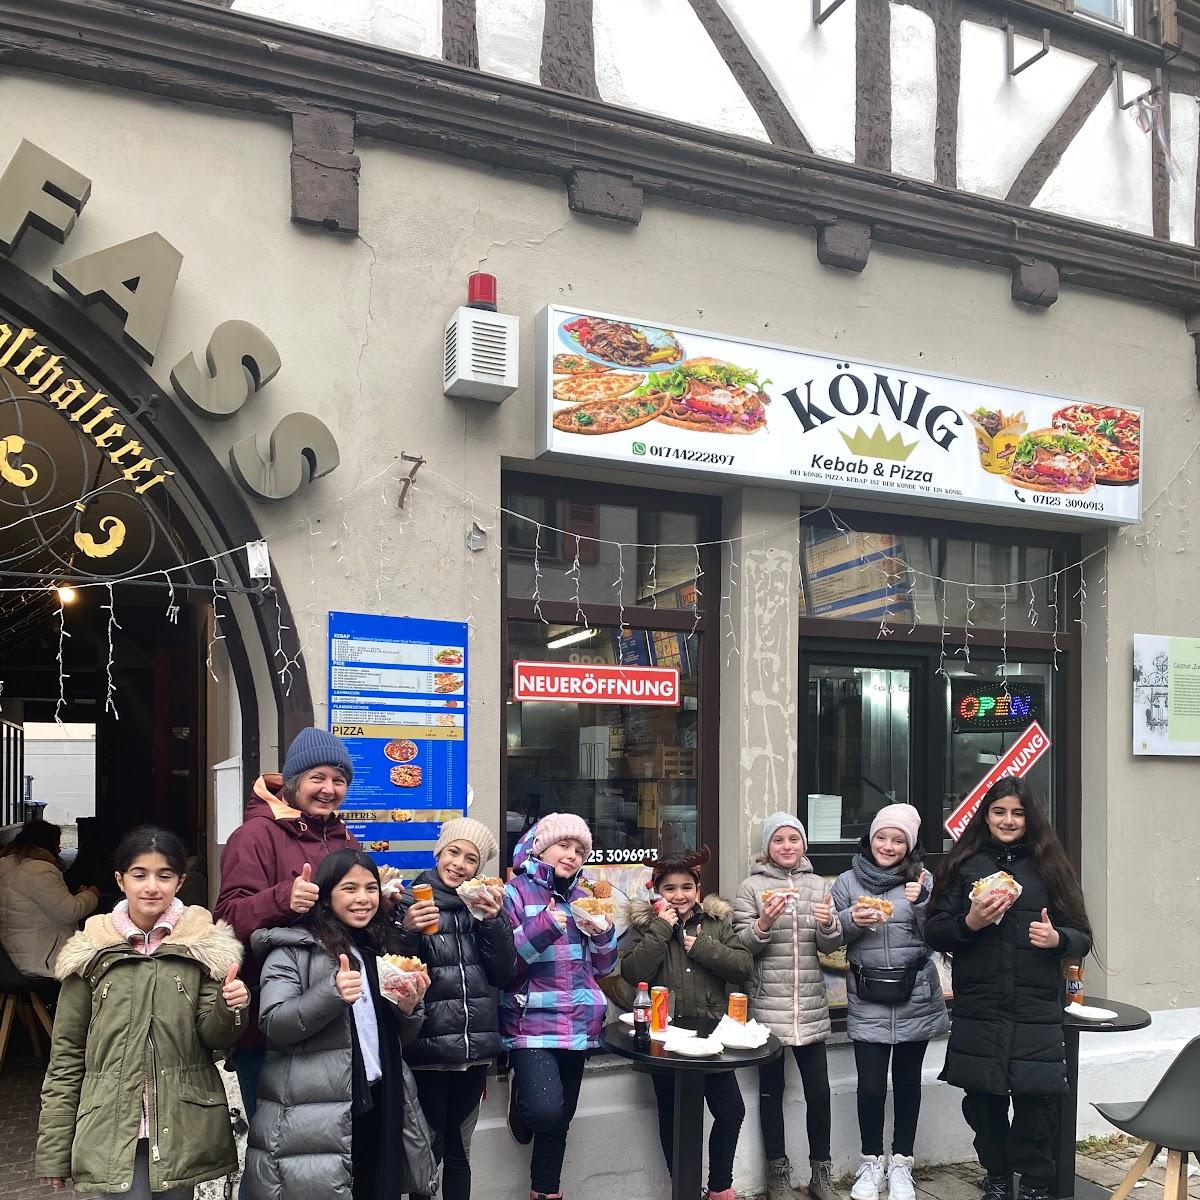 Restaurant "König Kebap & pizza" in Bad Urach